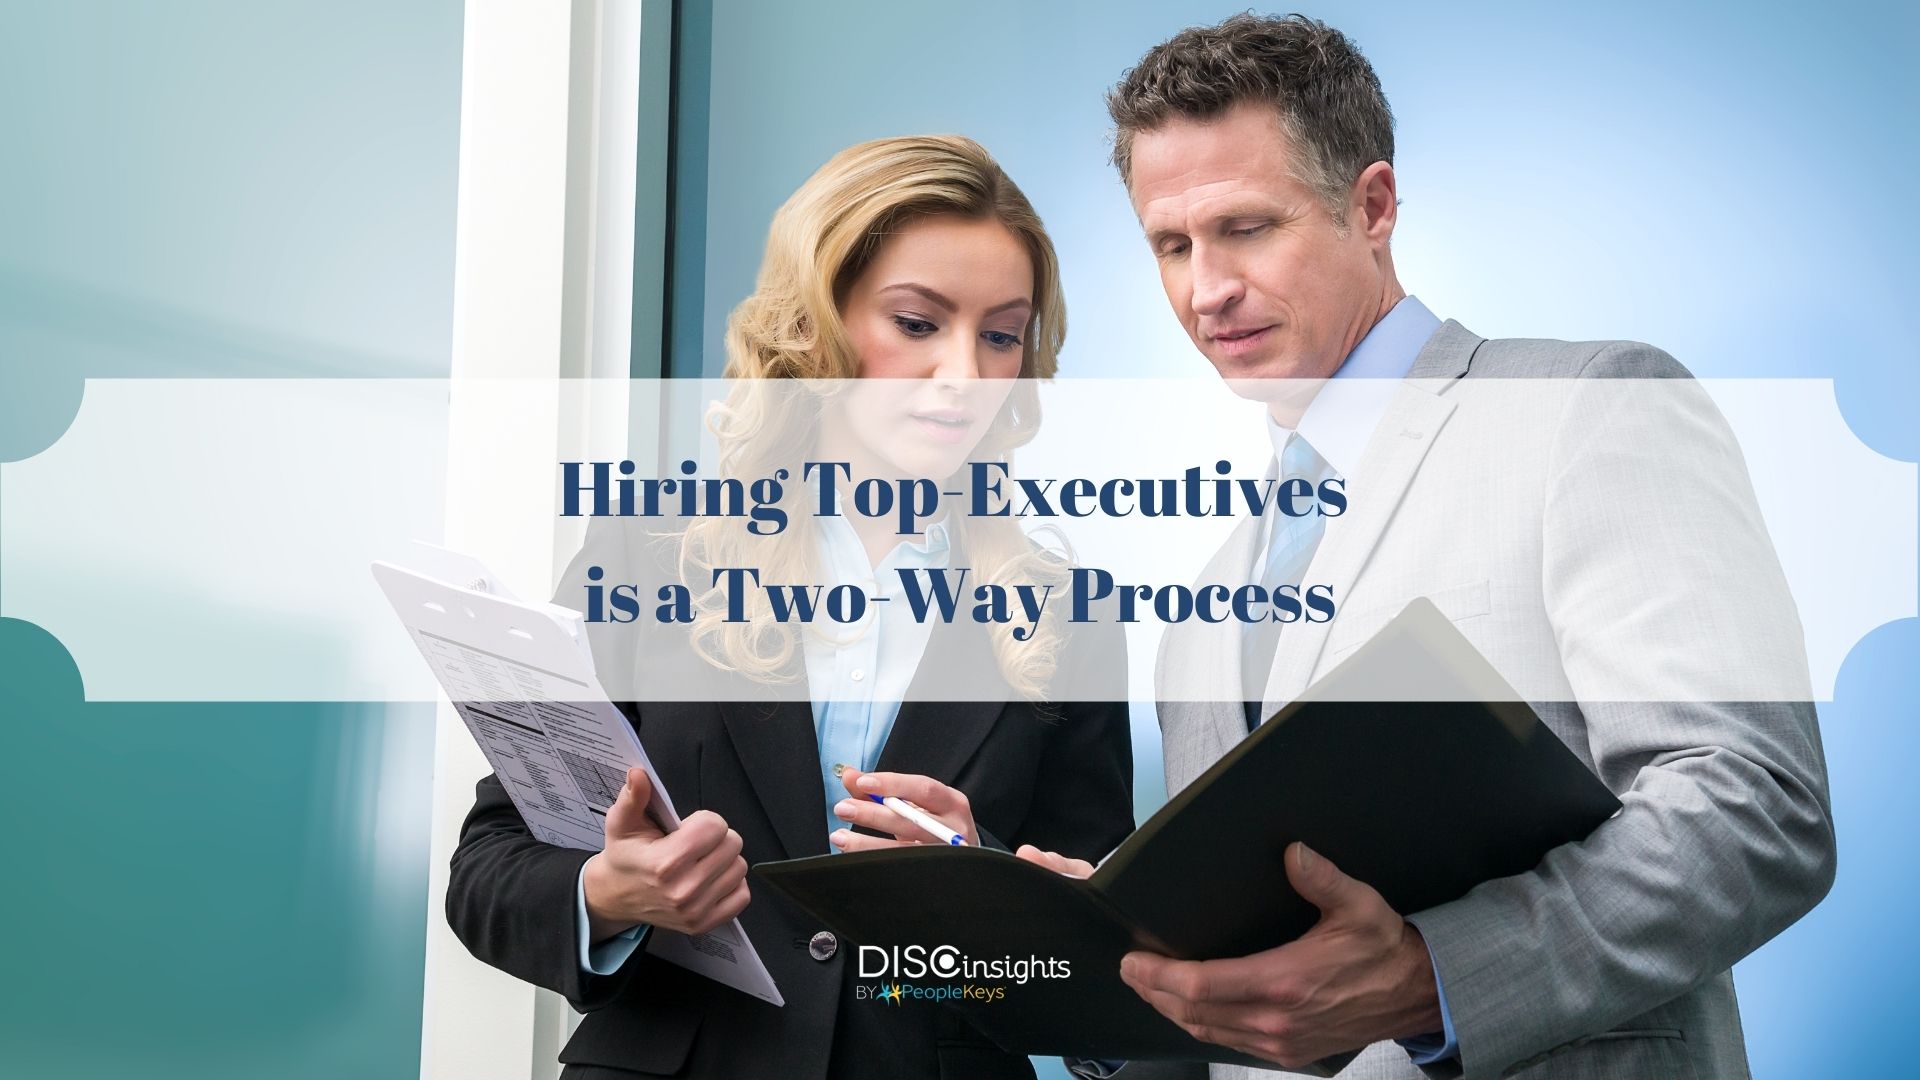 Hiring top-executives is a two-way process